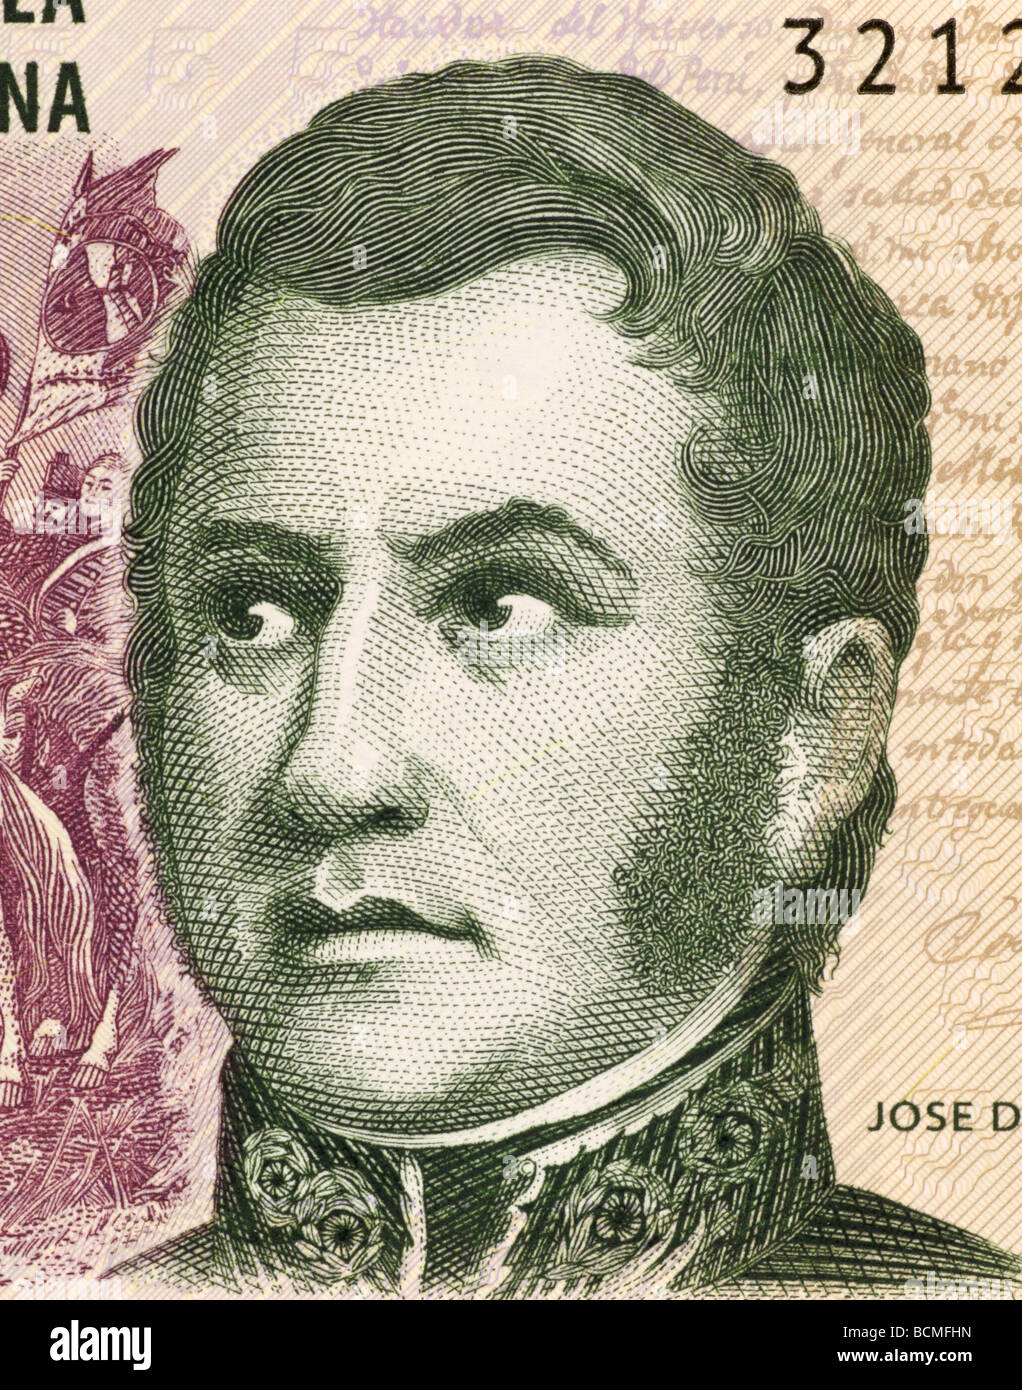 Jose de San Martin on 5 Pesos 2003 Banknote from Argentina Stock Photo